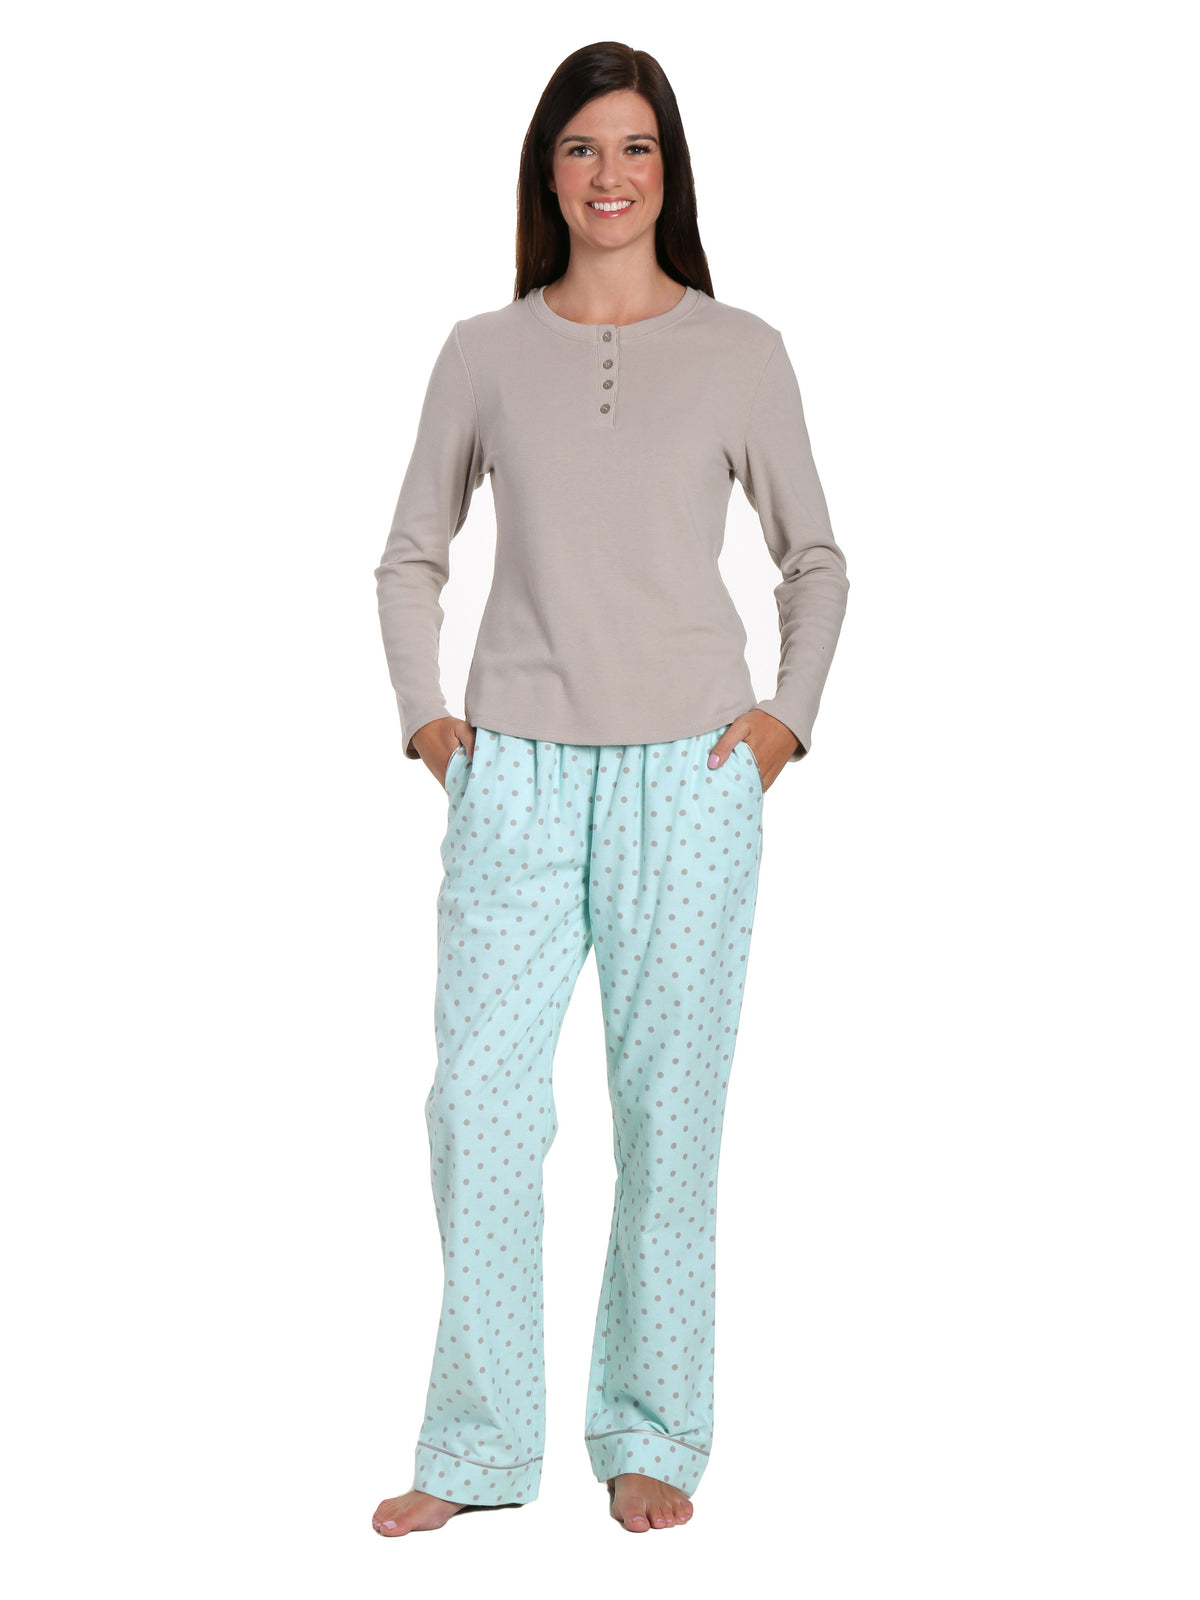 Womens Premium Cotton Flannel Loungewear Set - Dots Diva Aqua-Gray